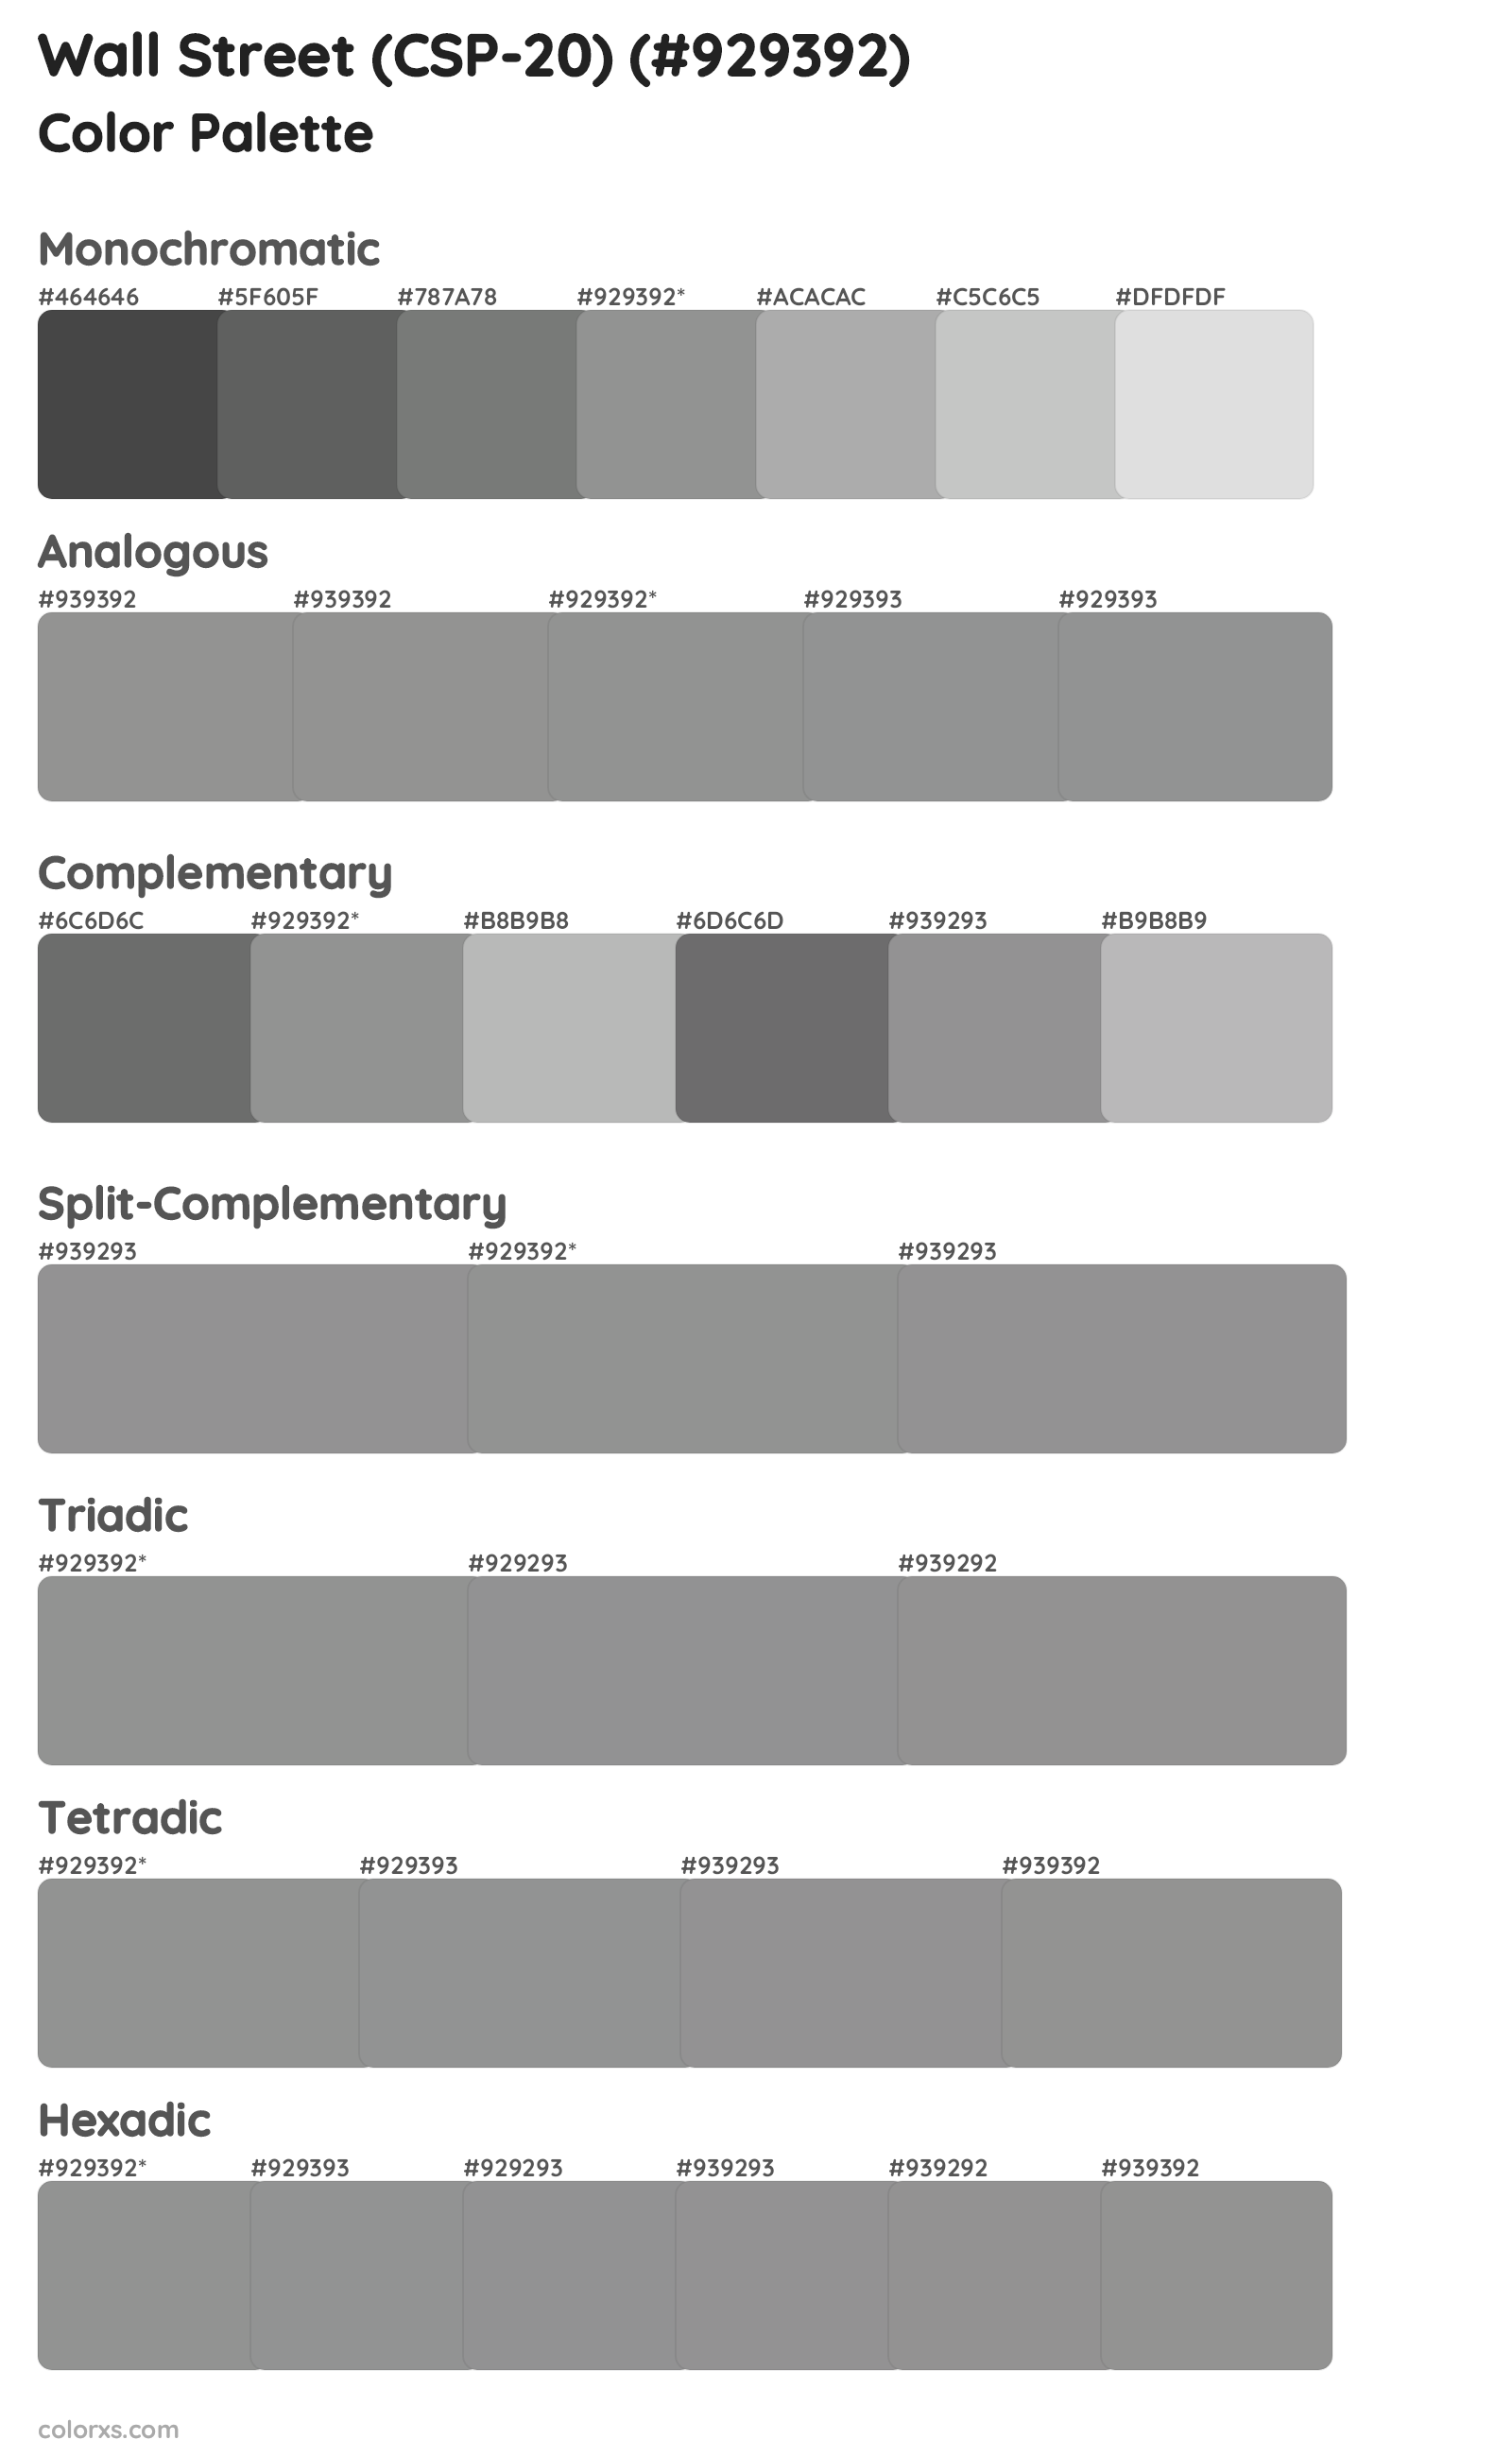 Wall Street (CSP-20) Color Scheme Palettes